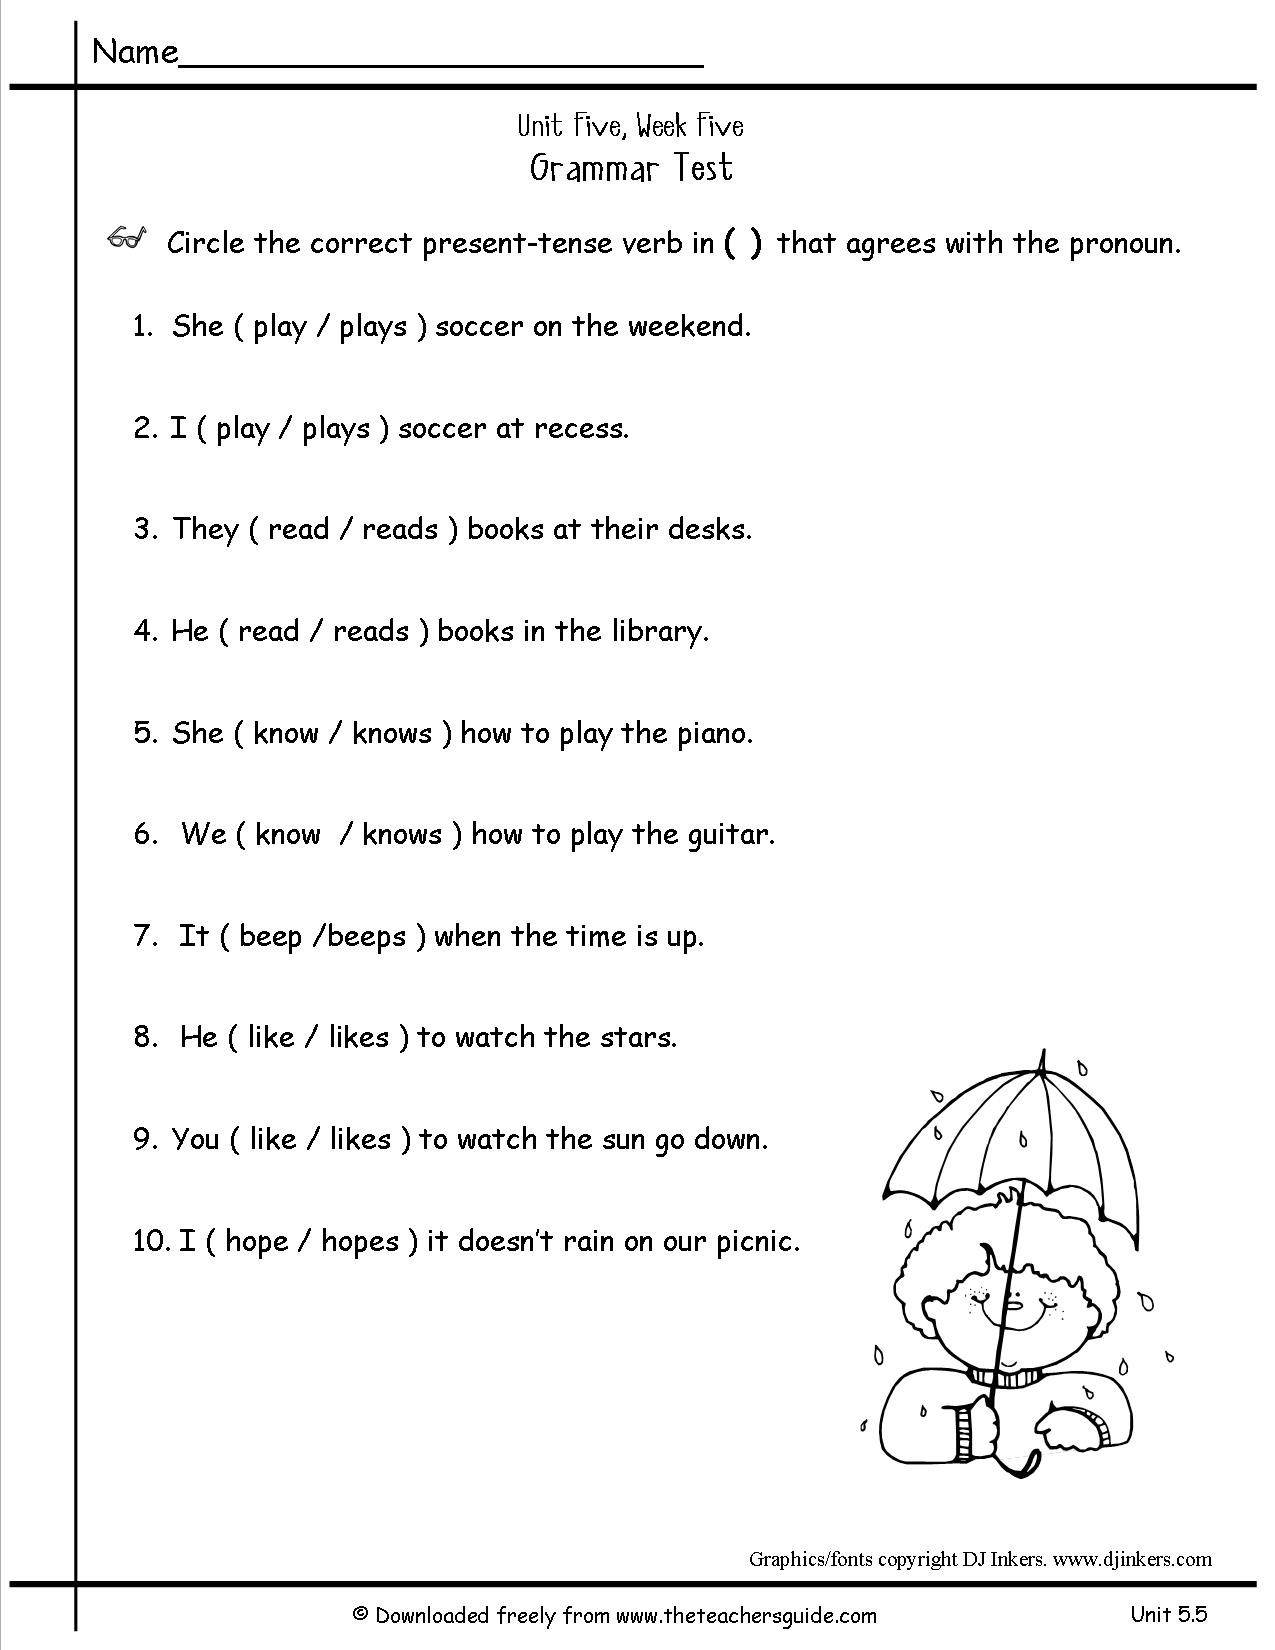 Pronoun Worksheets 2nd Grade Free Pronoun Worksheet for 2nd Grade